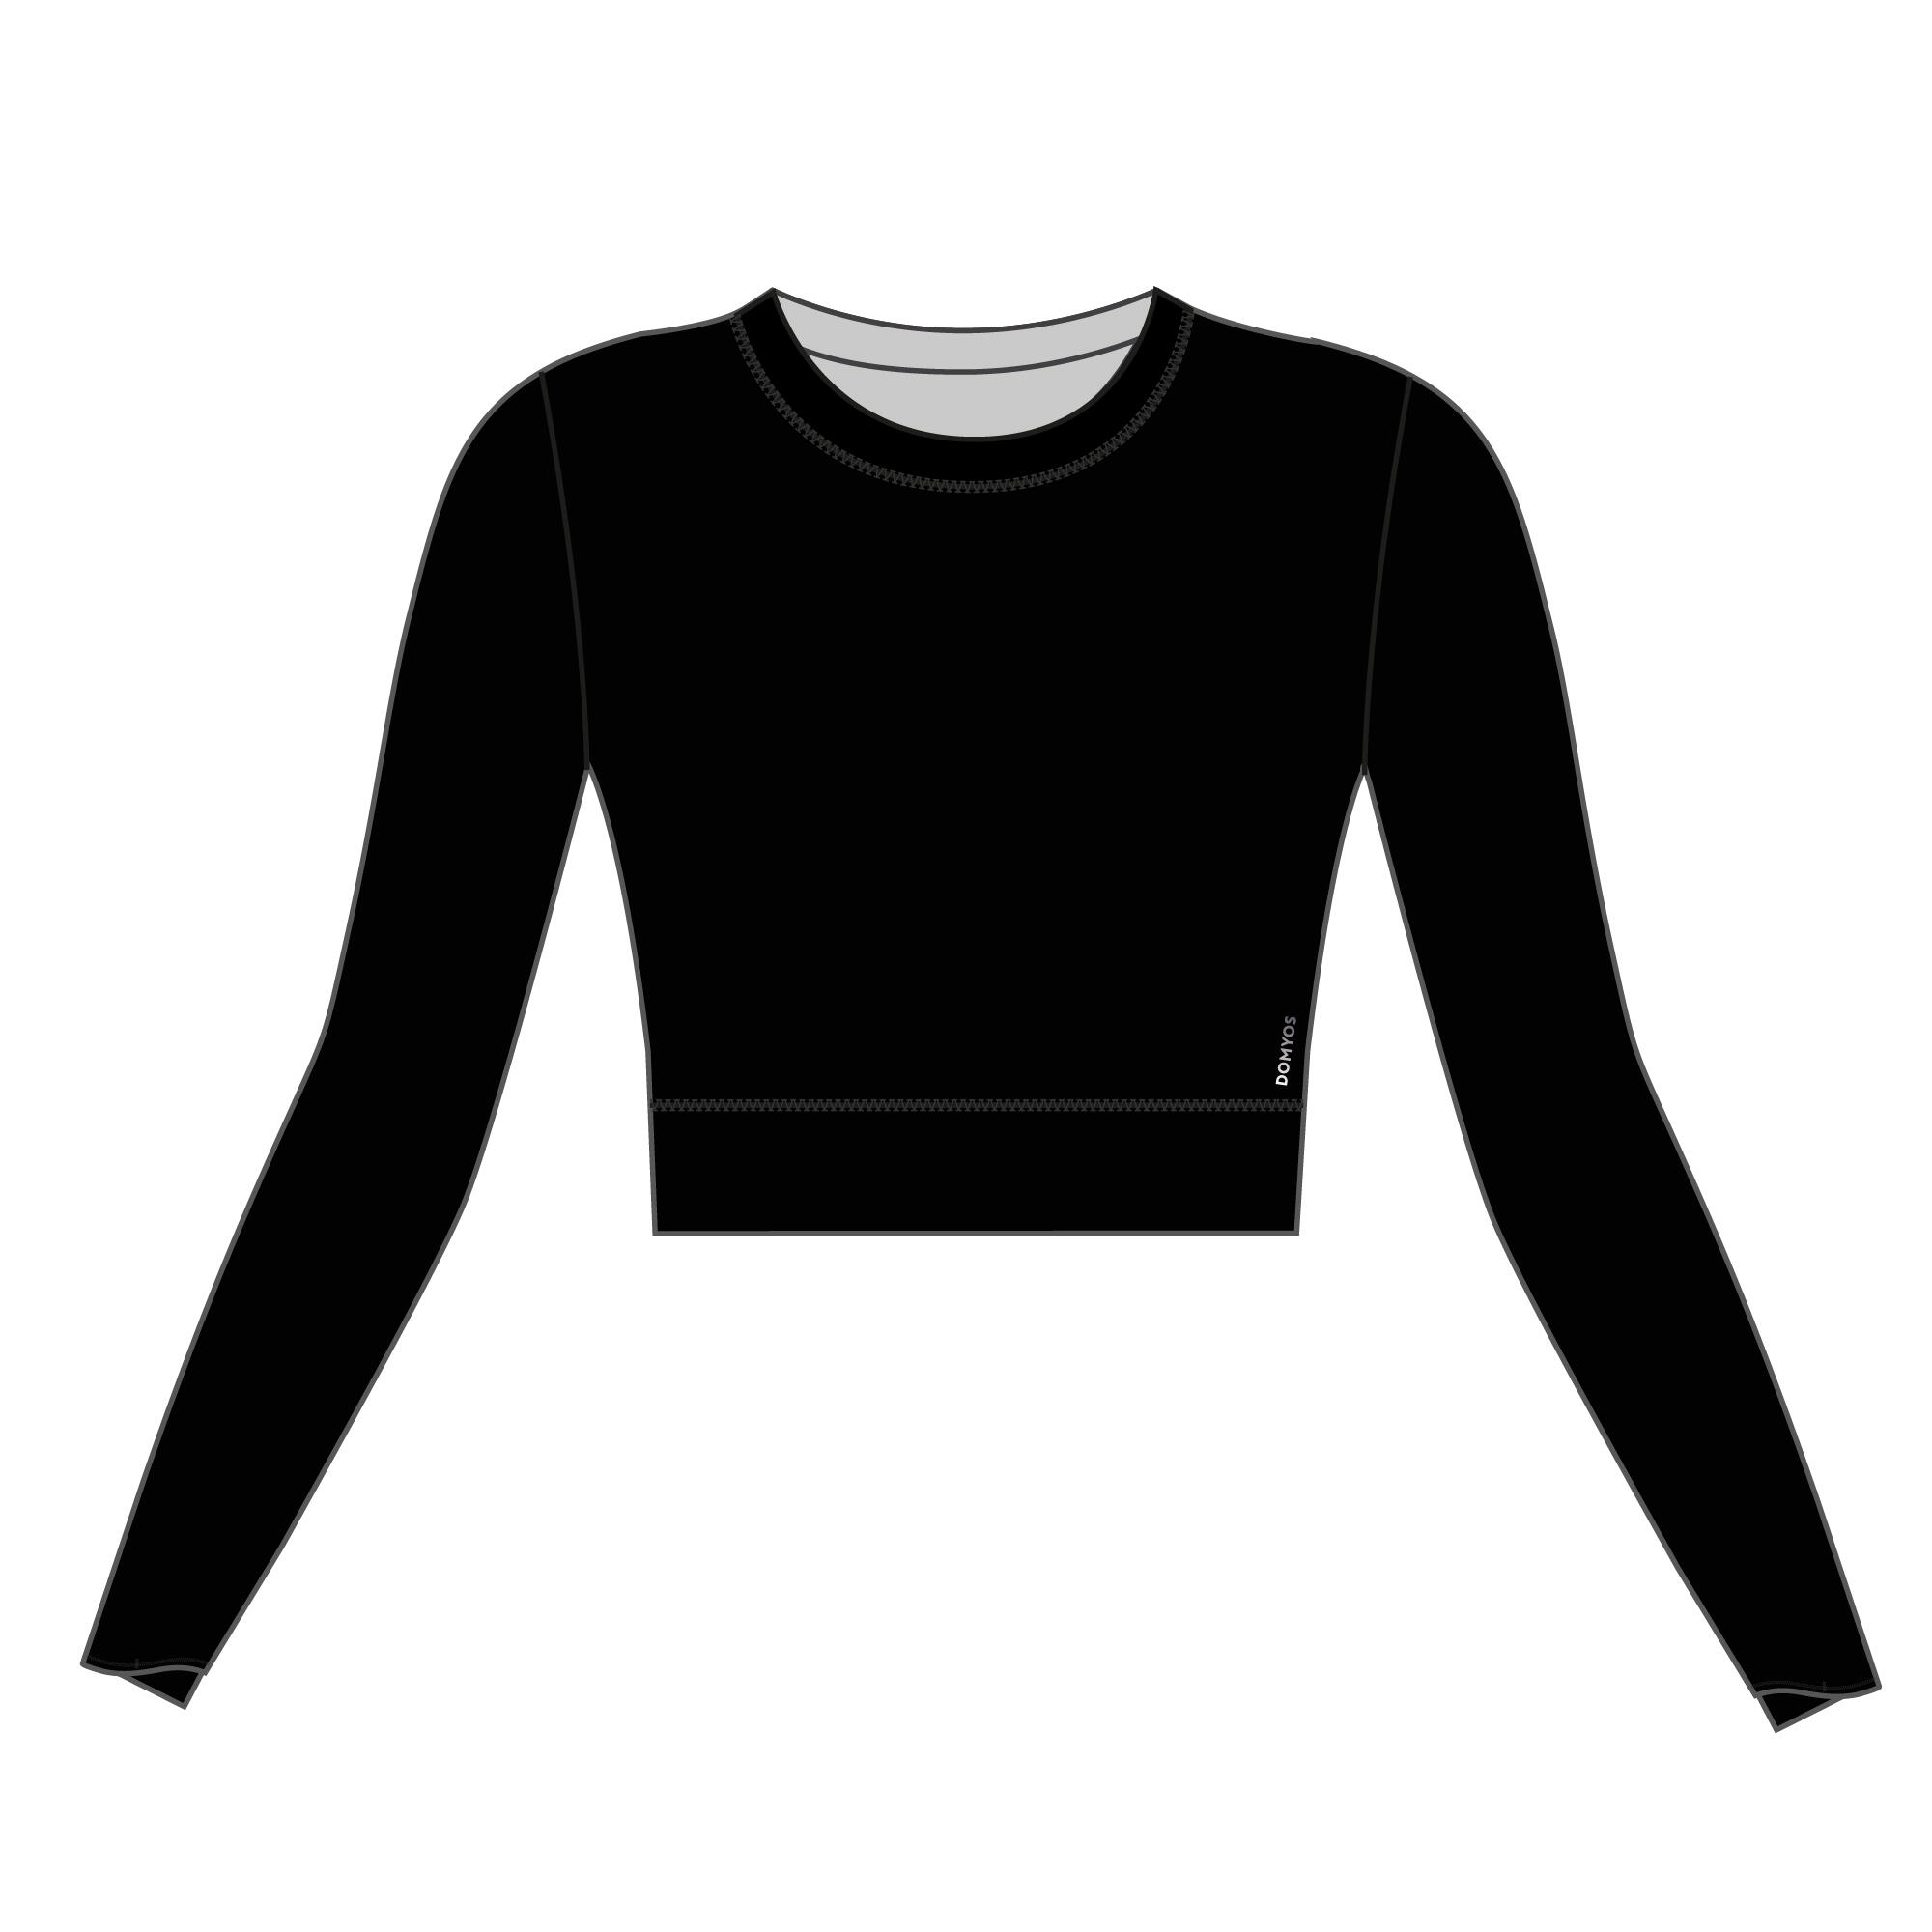 Women's Fitness Long-Sleeved Cropped T-Shirt - Black 6/7